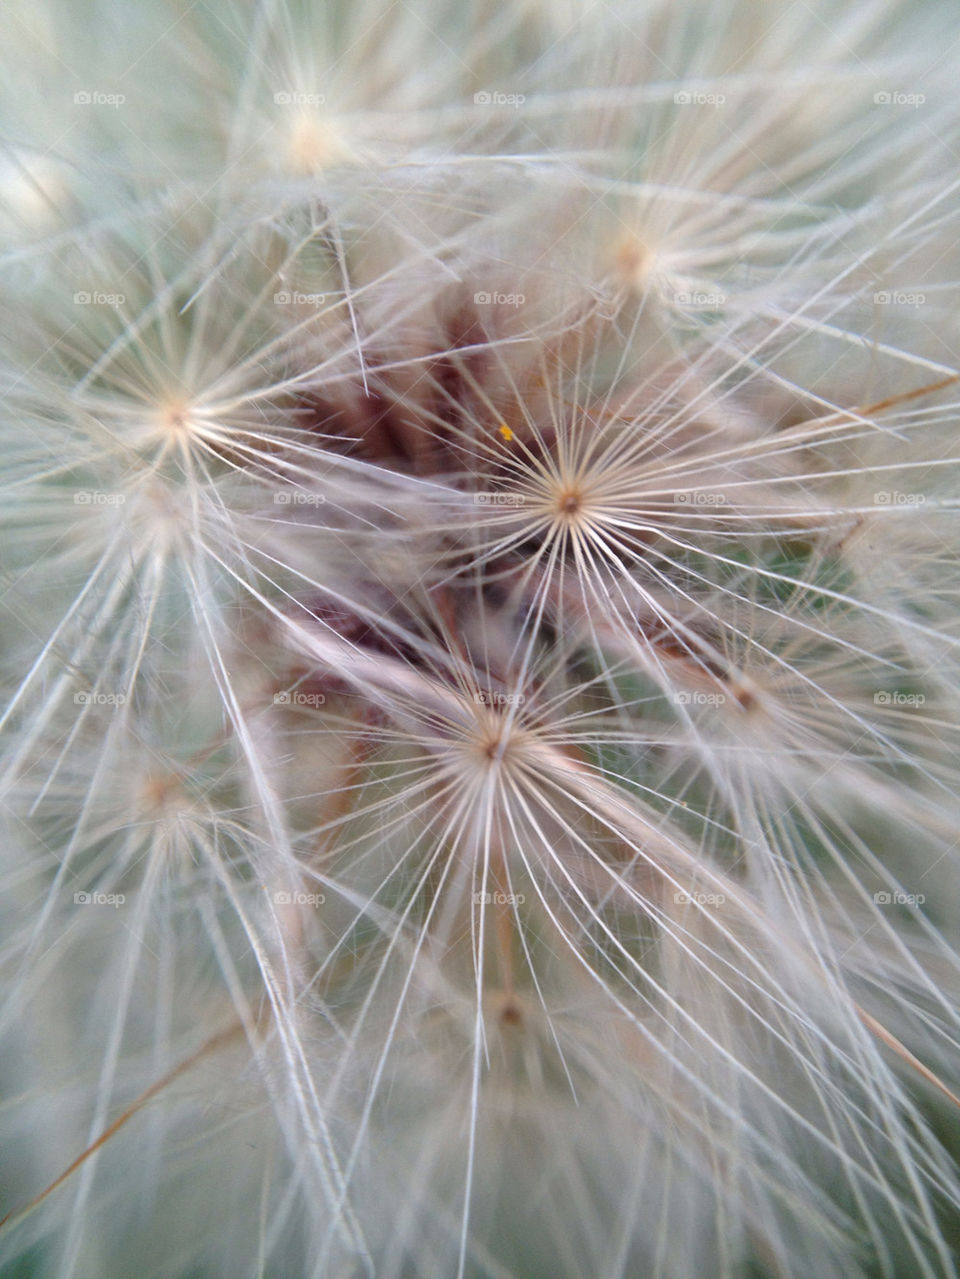 dandelion weed seeds by cewallace